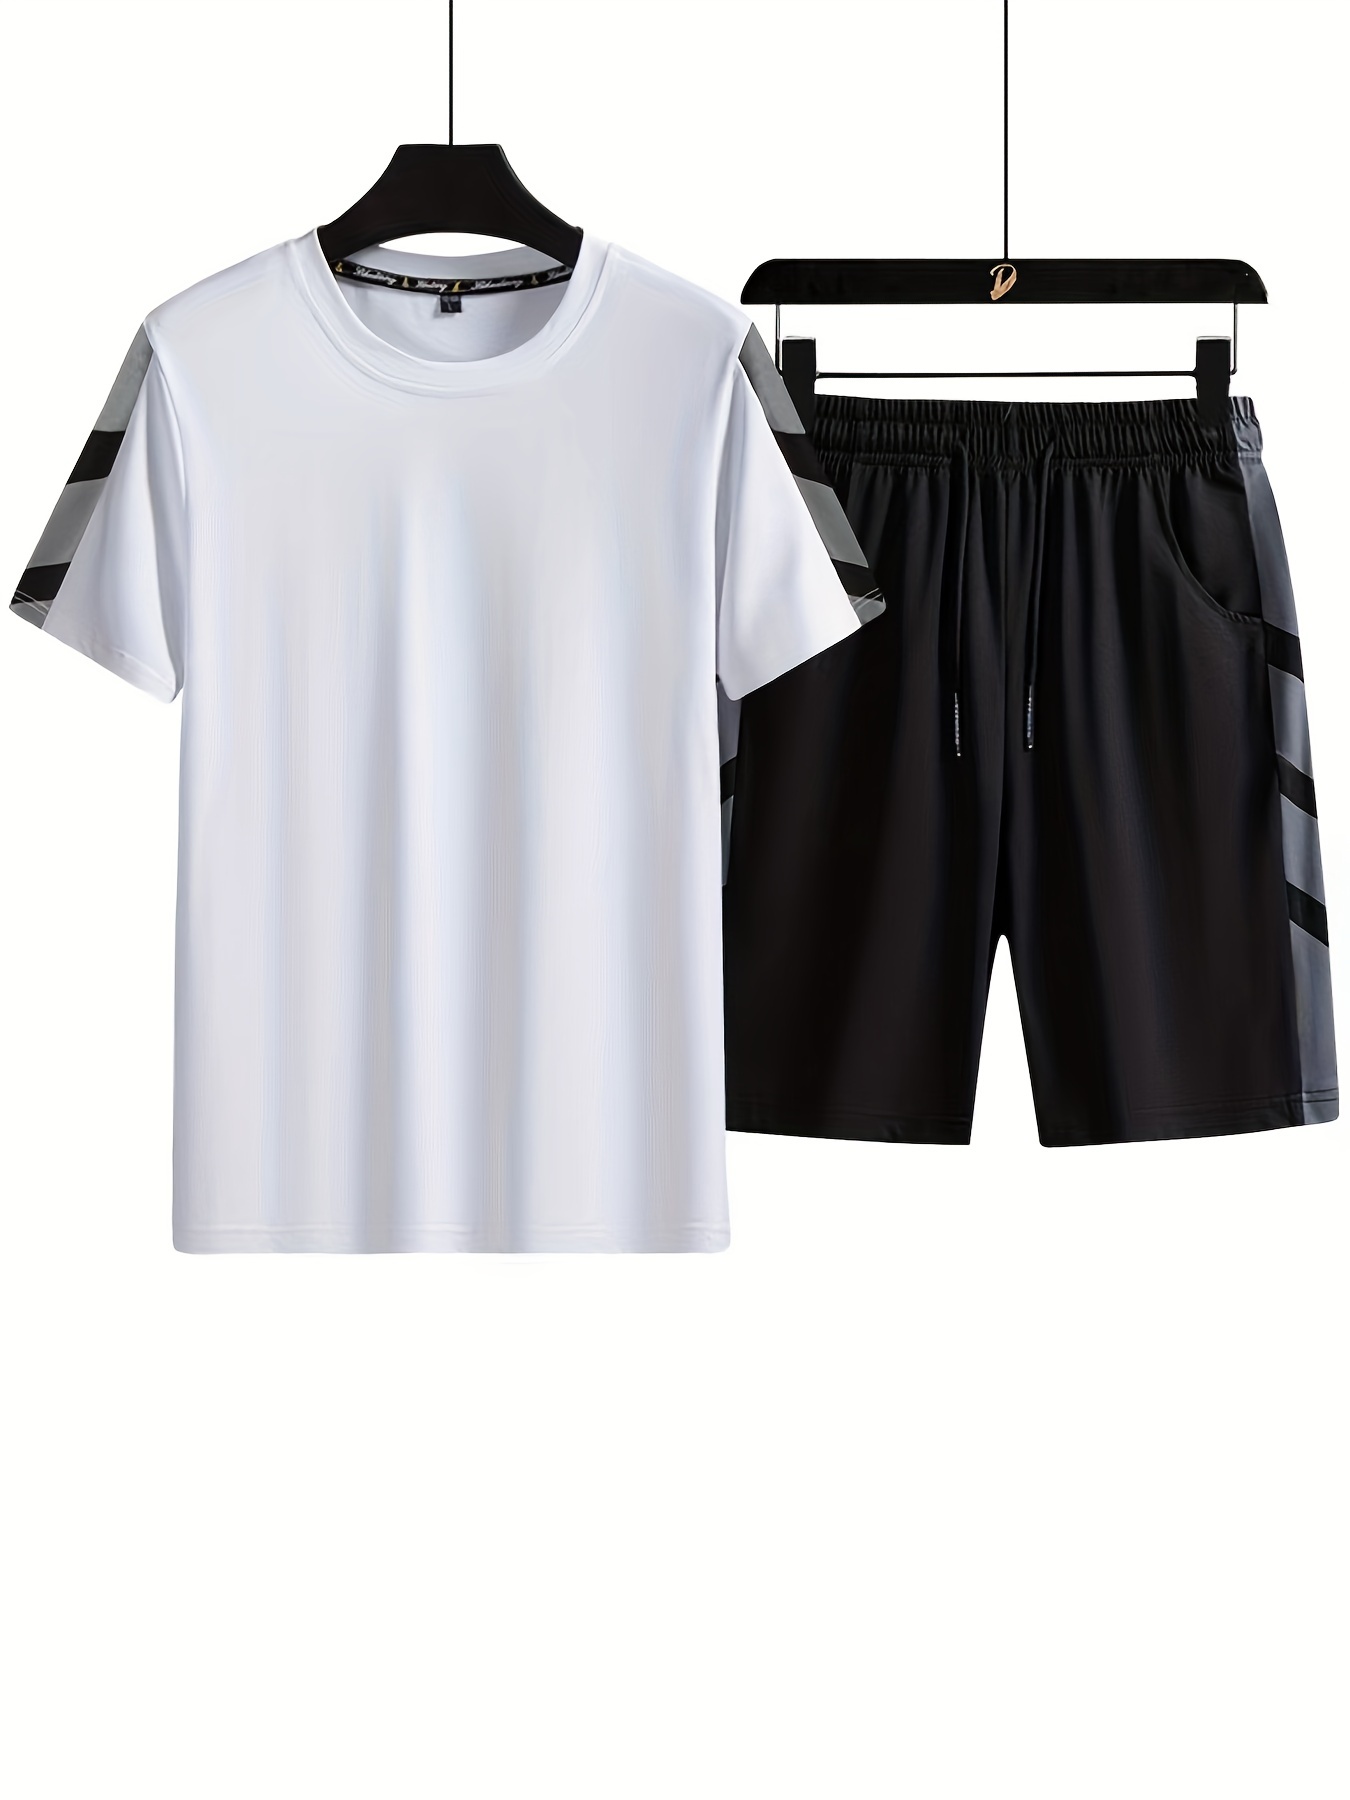 Men's Short Sleeve T-Shirt and Shorts Set Sport Casual Crew Neck